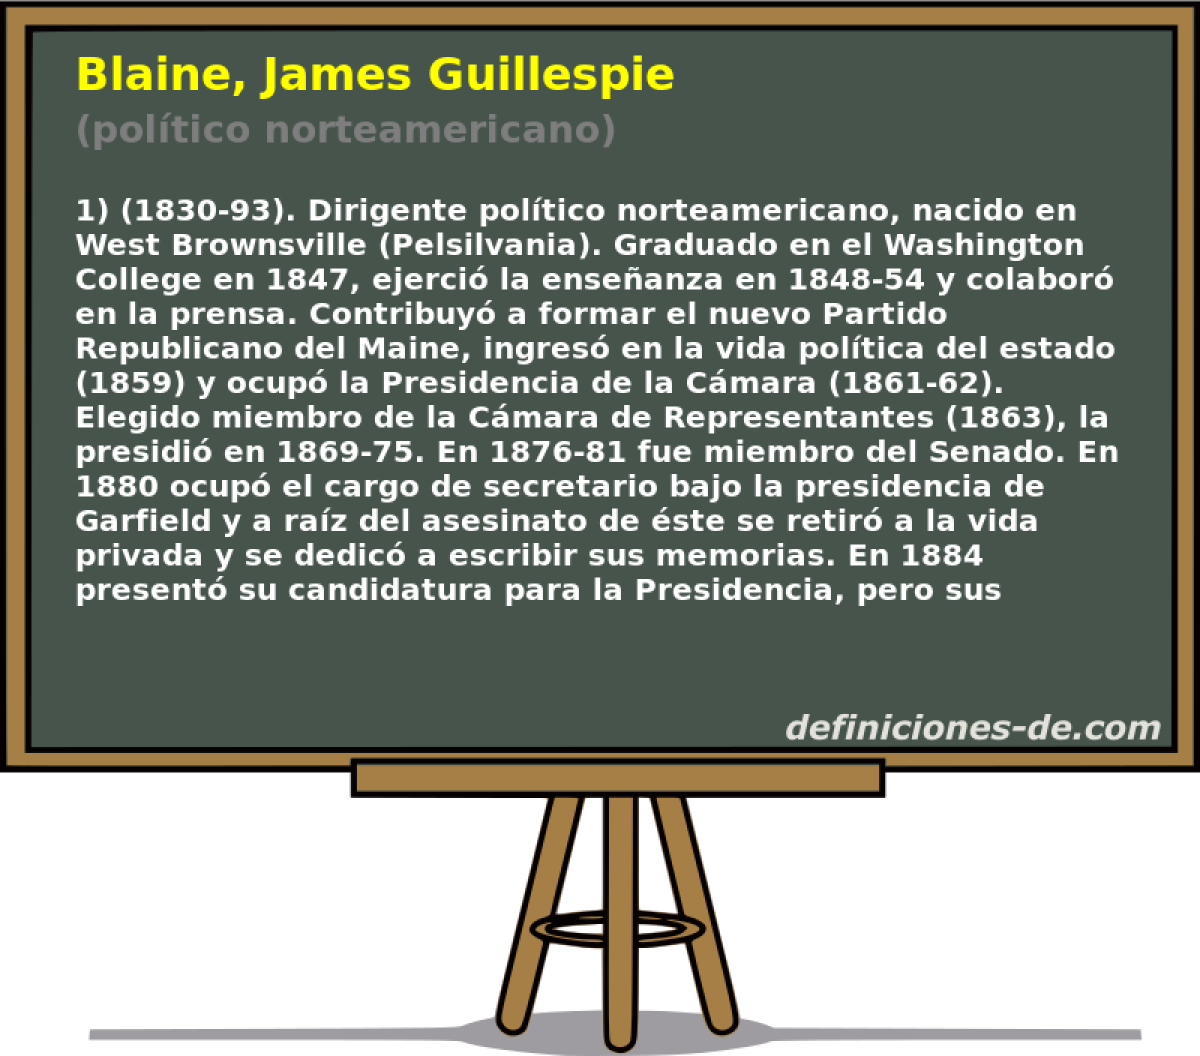 Blaine, James Guillespie (poltico norteamericano)